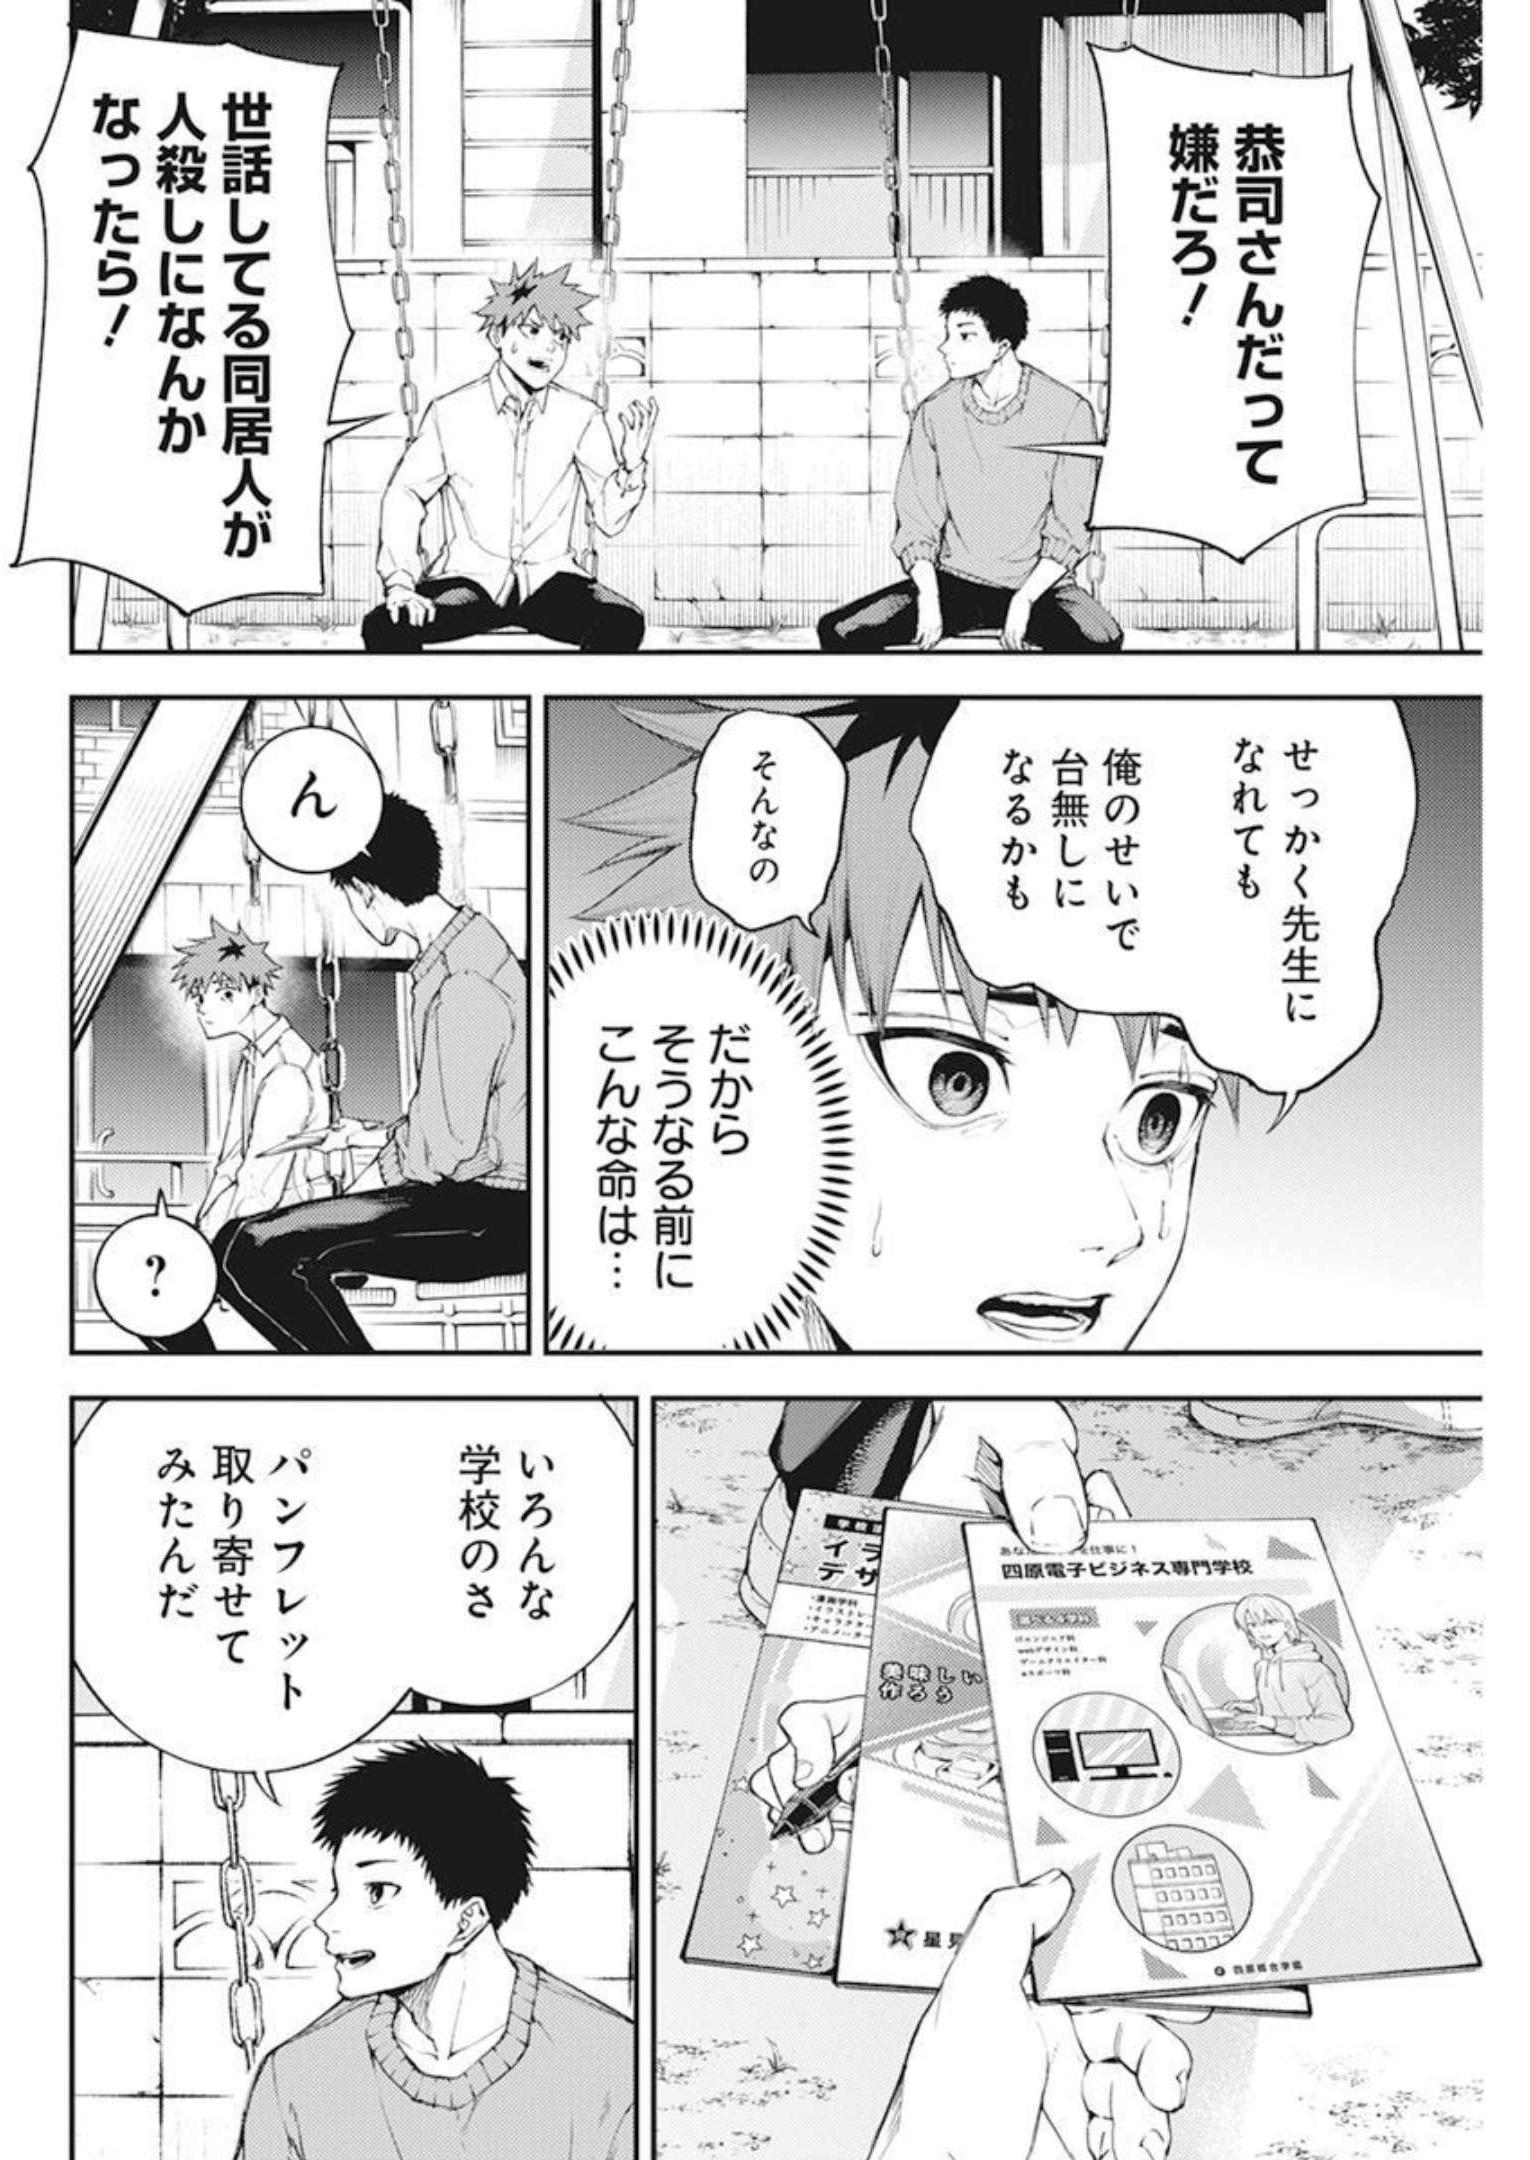 Tokyo Satsujin Gakuen - Chapter 1 - Page 31